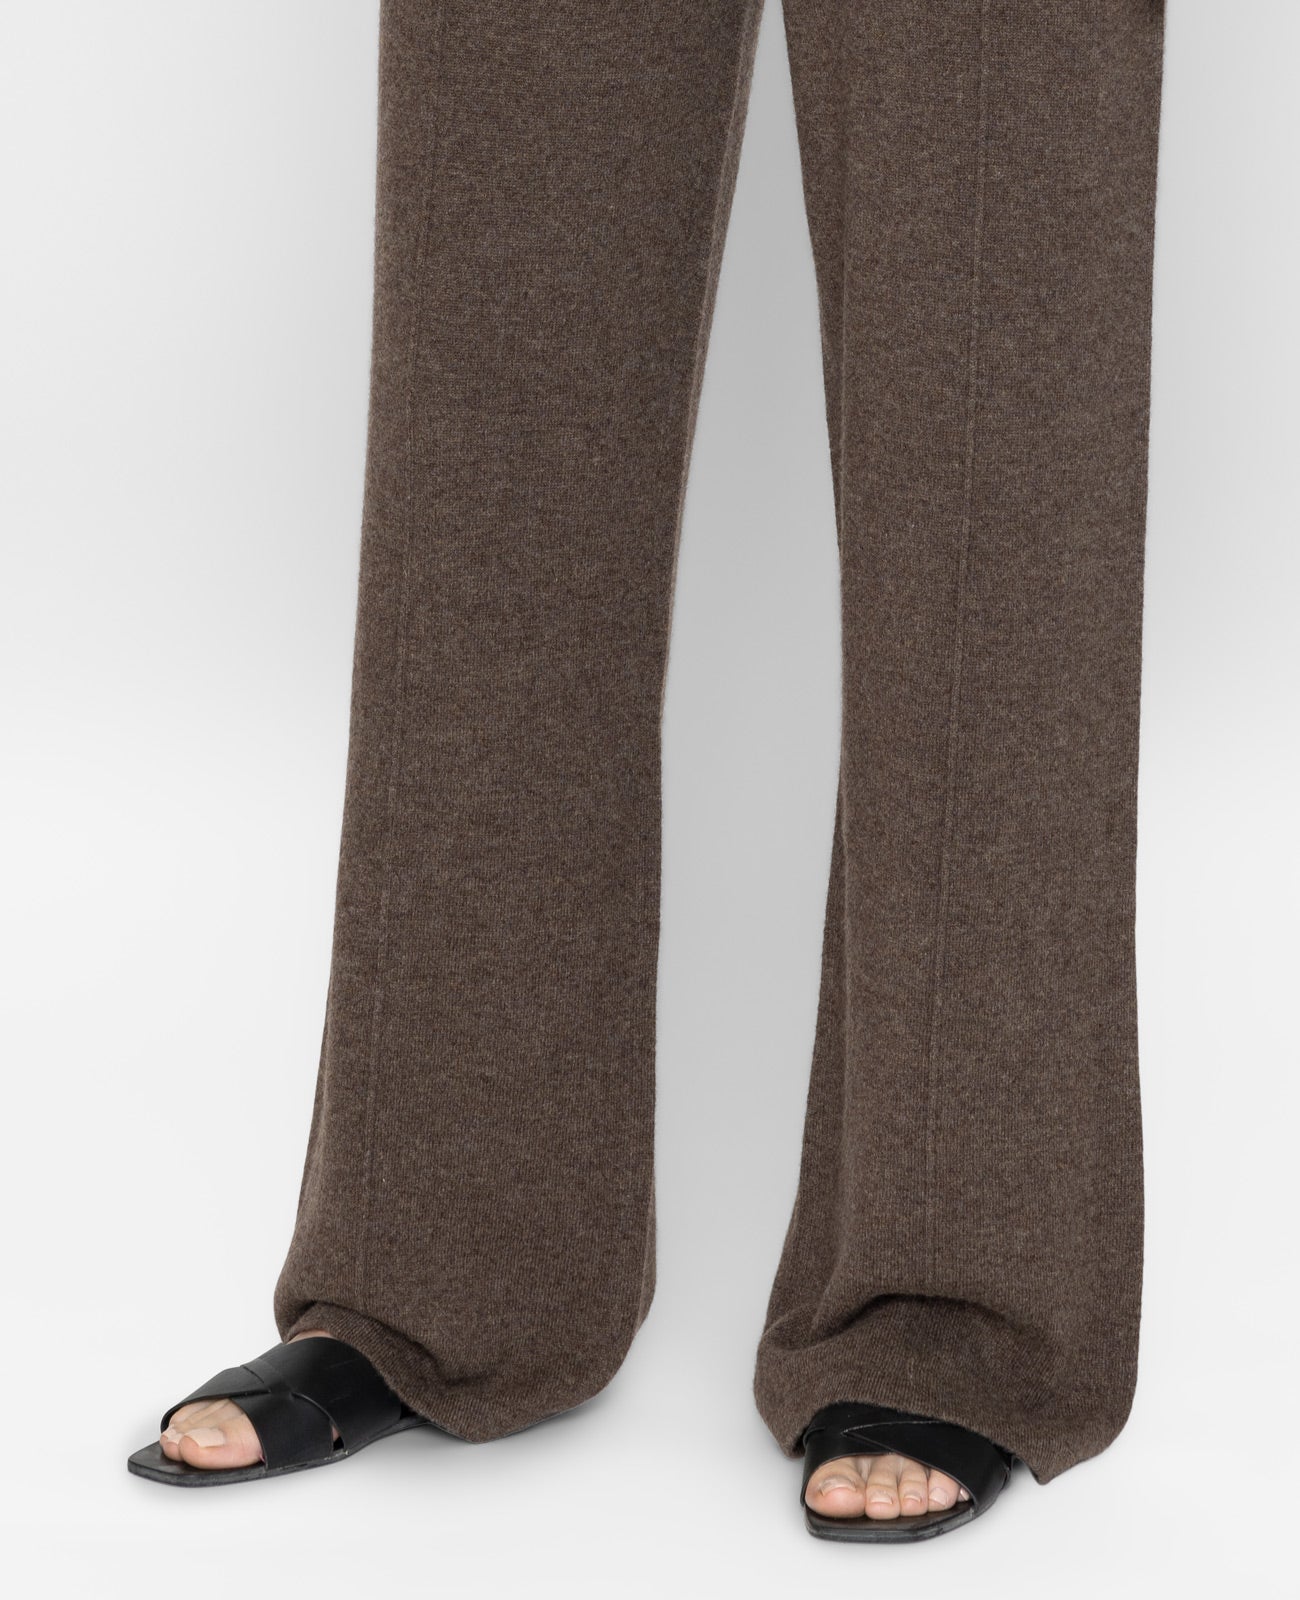 Cashmere Relax Pants in Dark Rye | GRANA #color_dark-rye